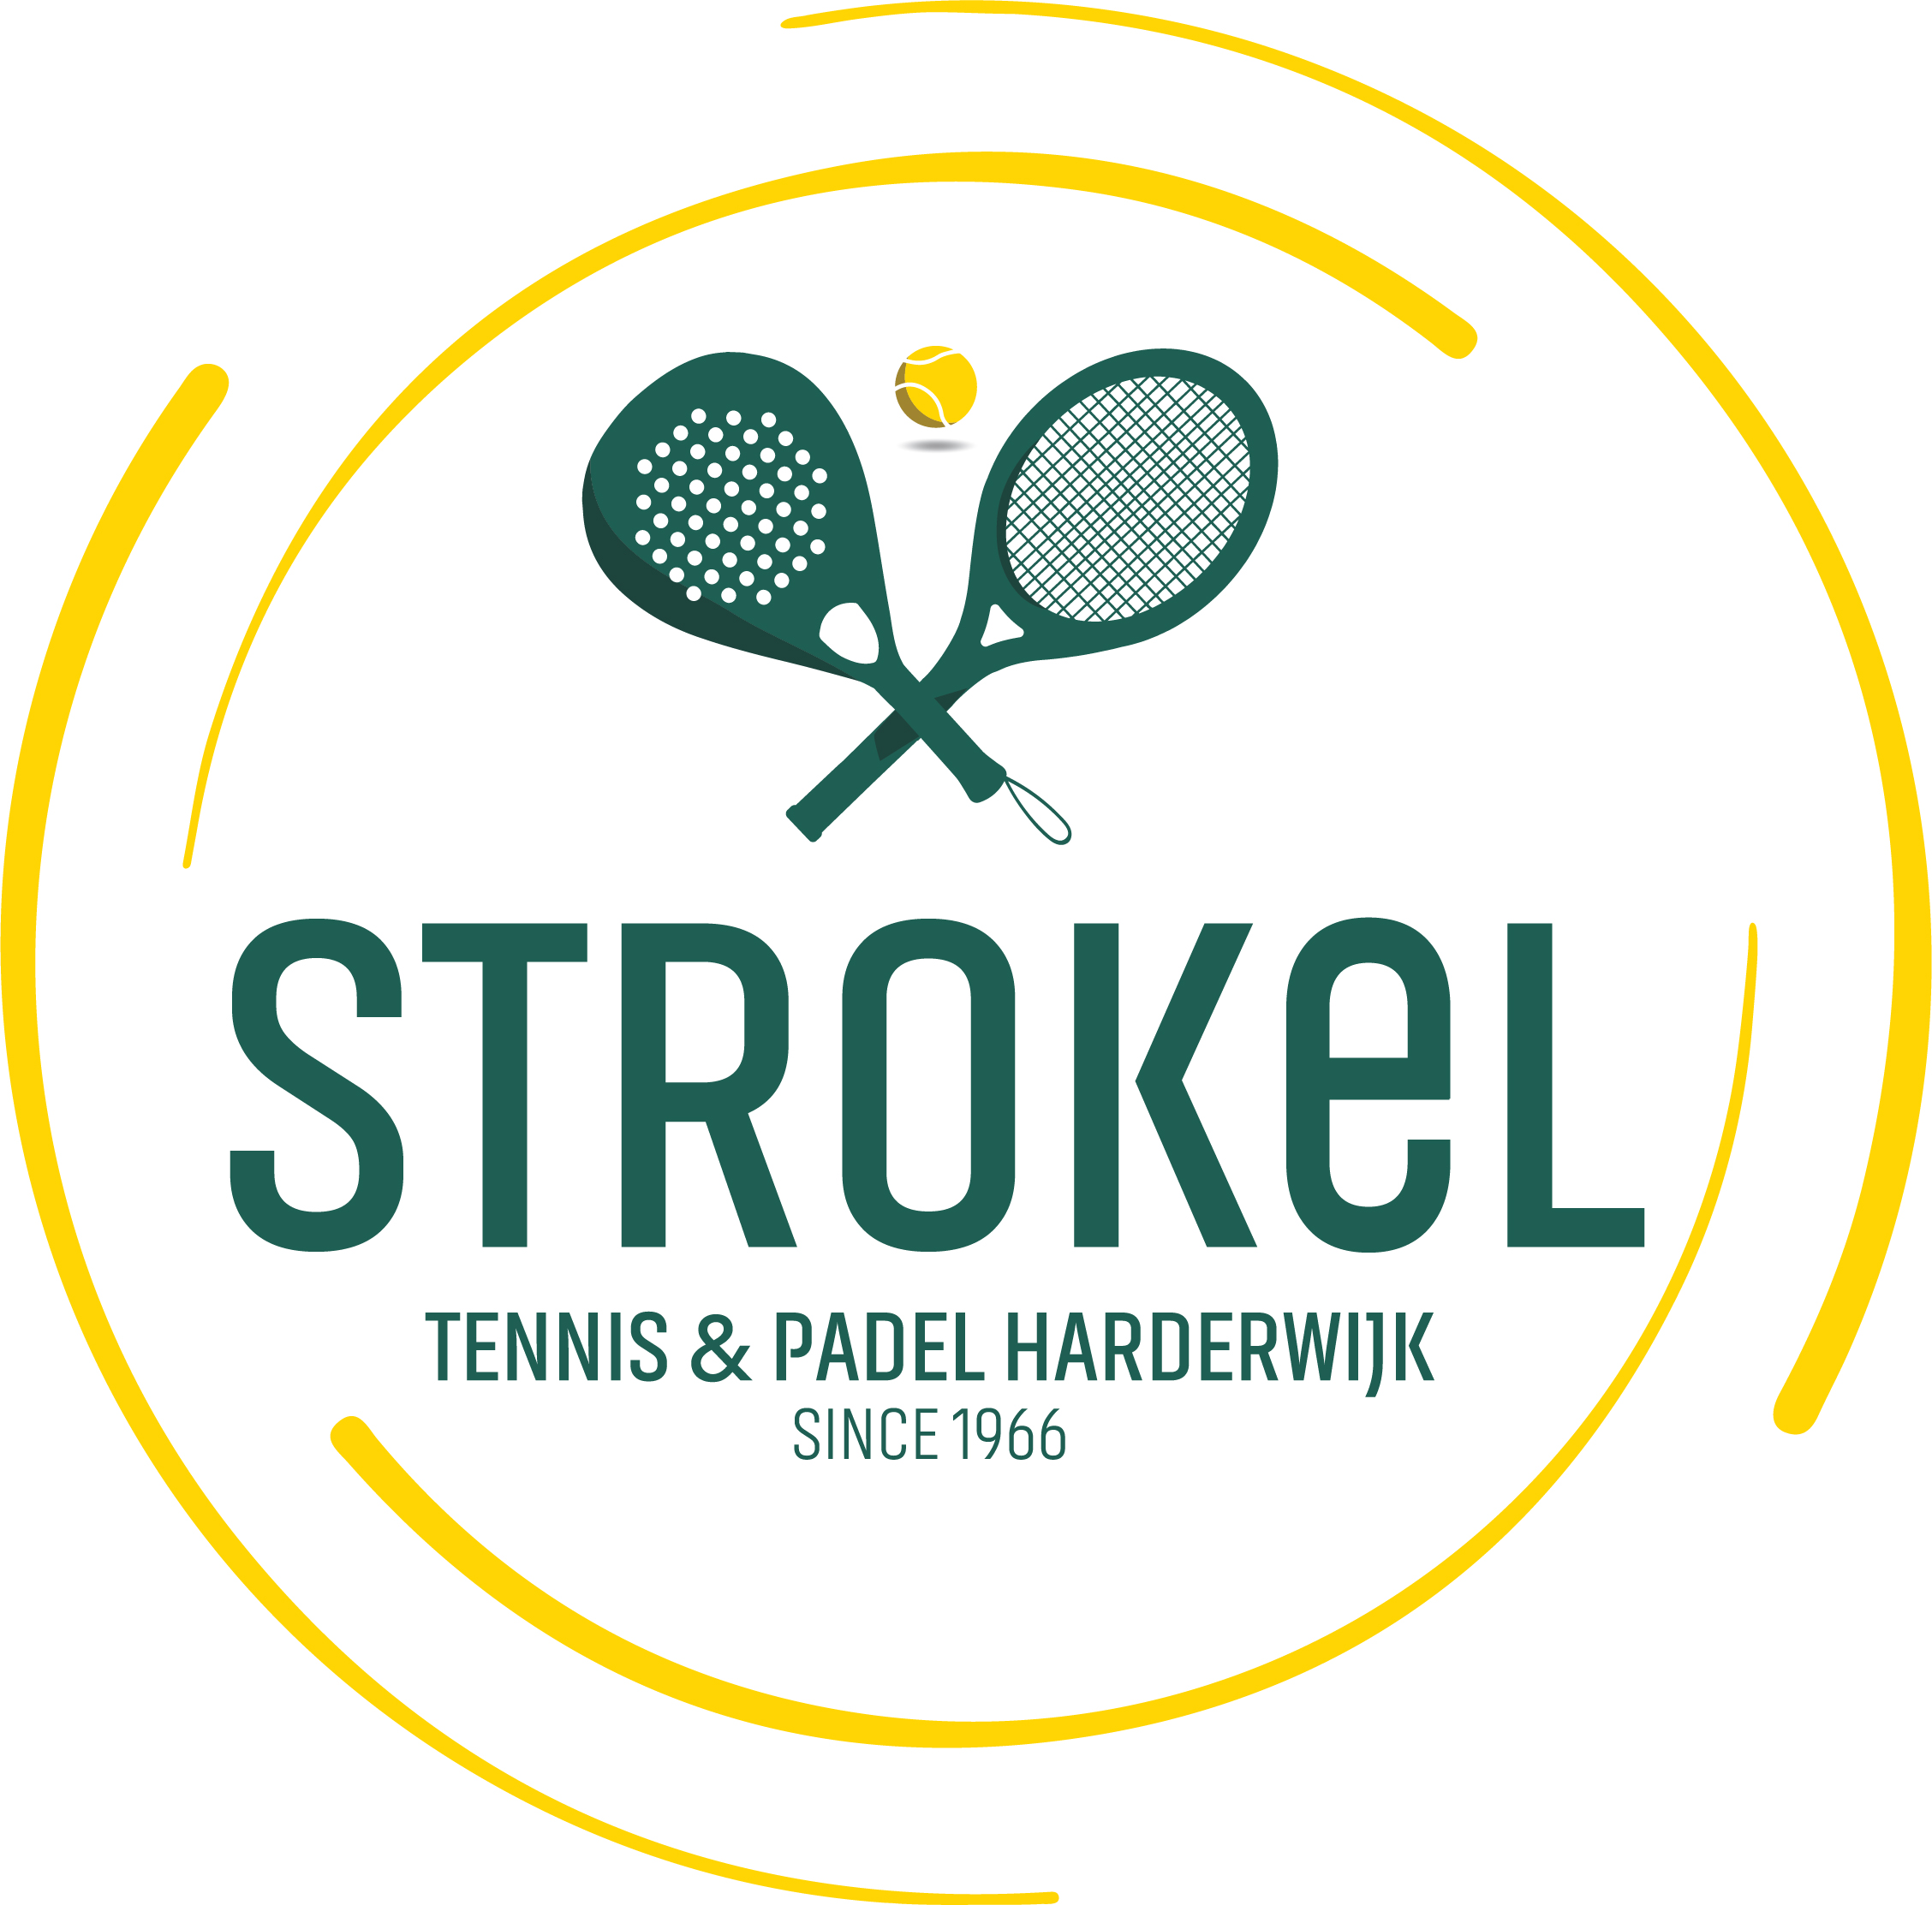 Logo TV Strokel